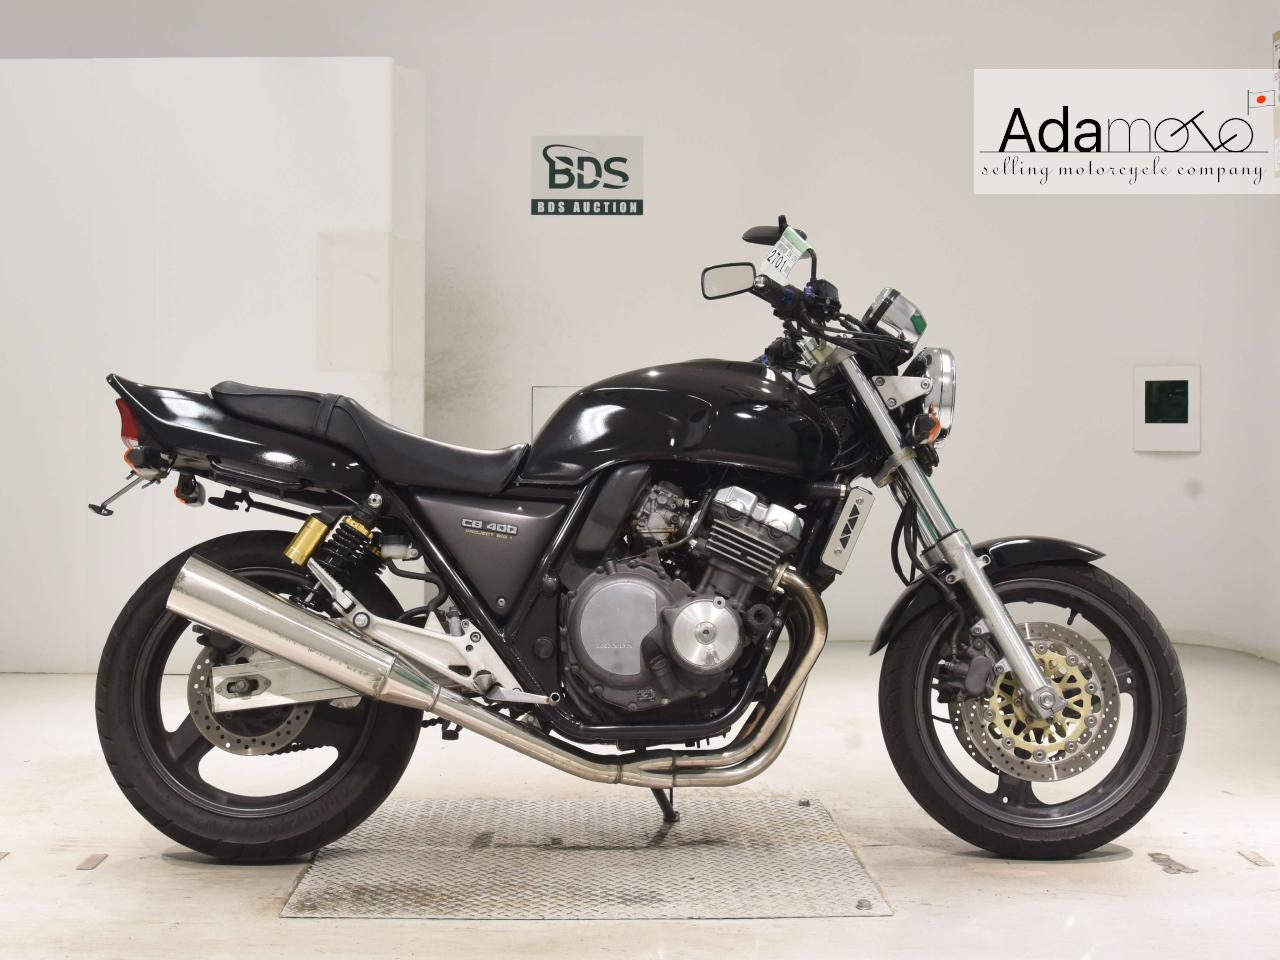 Honda CB400SF - Adamoto - Motorcycles from Japan